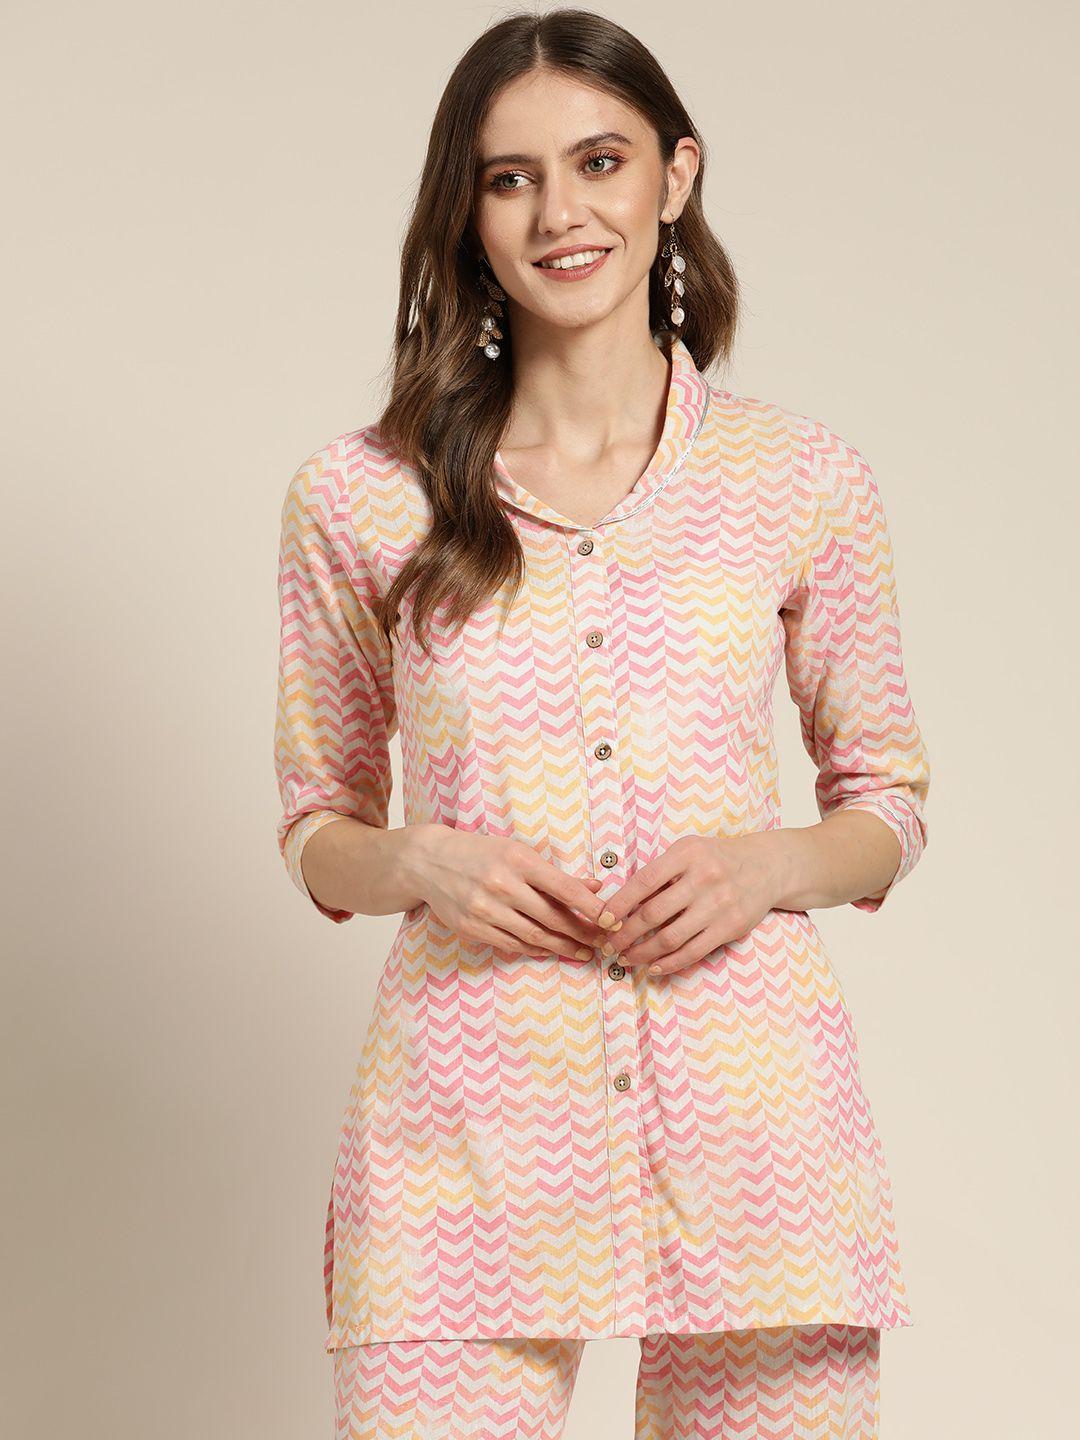 shae by sassafras pink & beige geometric print shirt style top